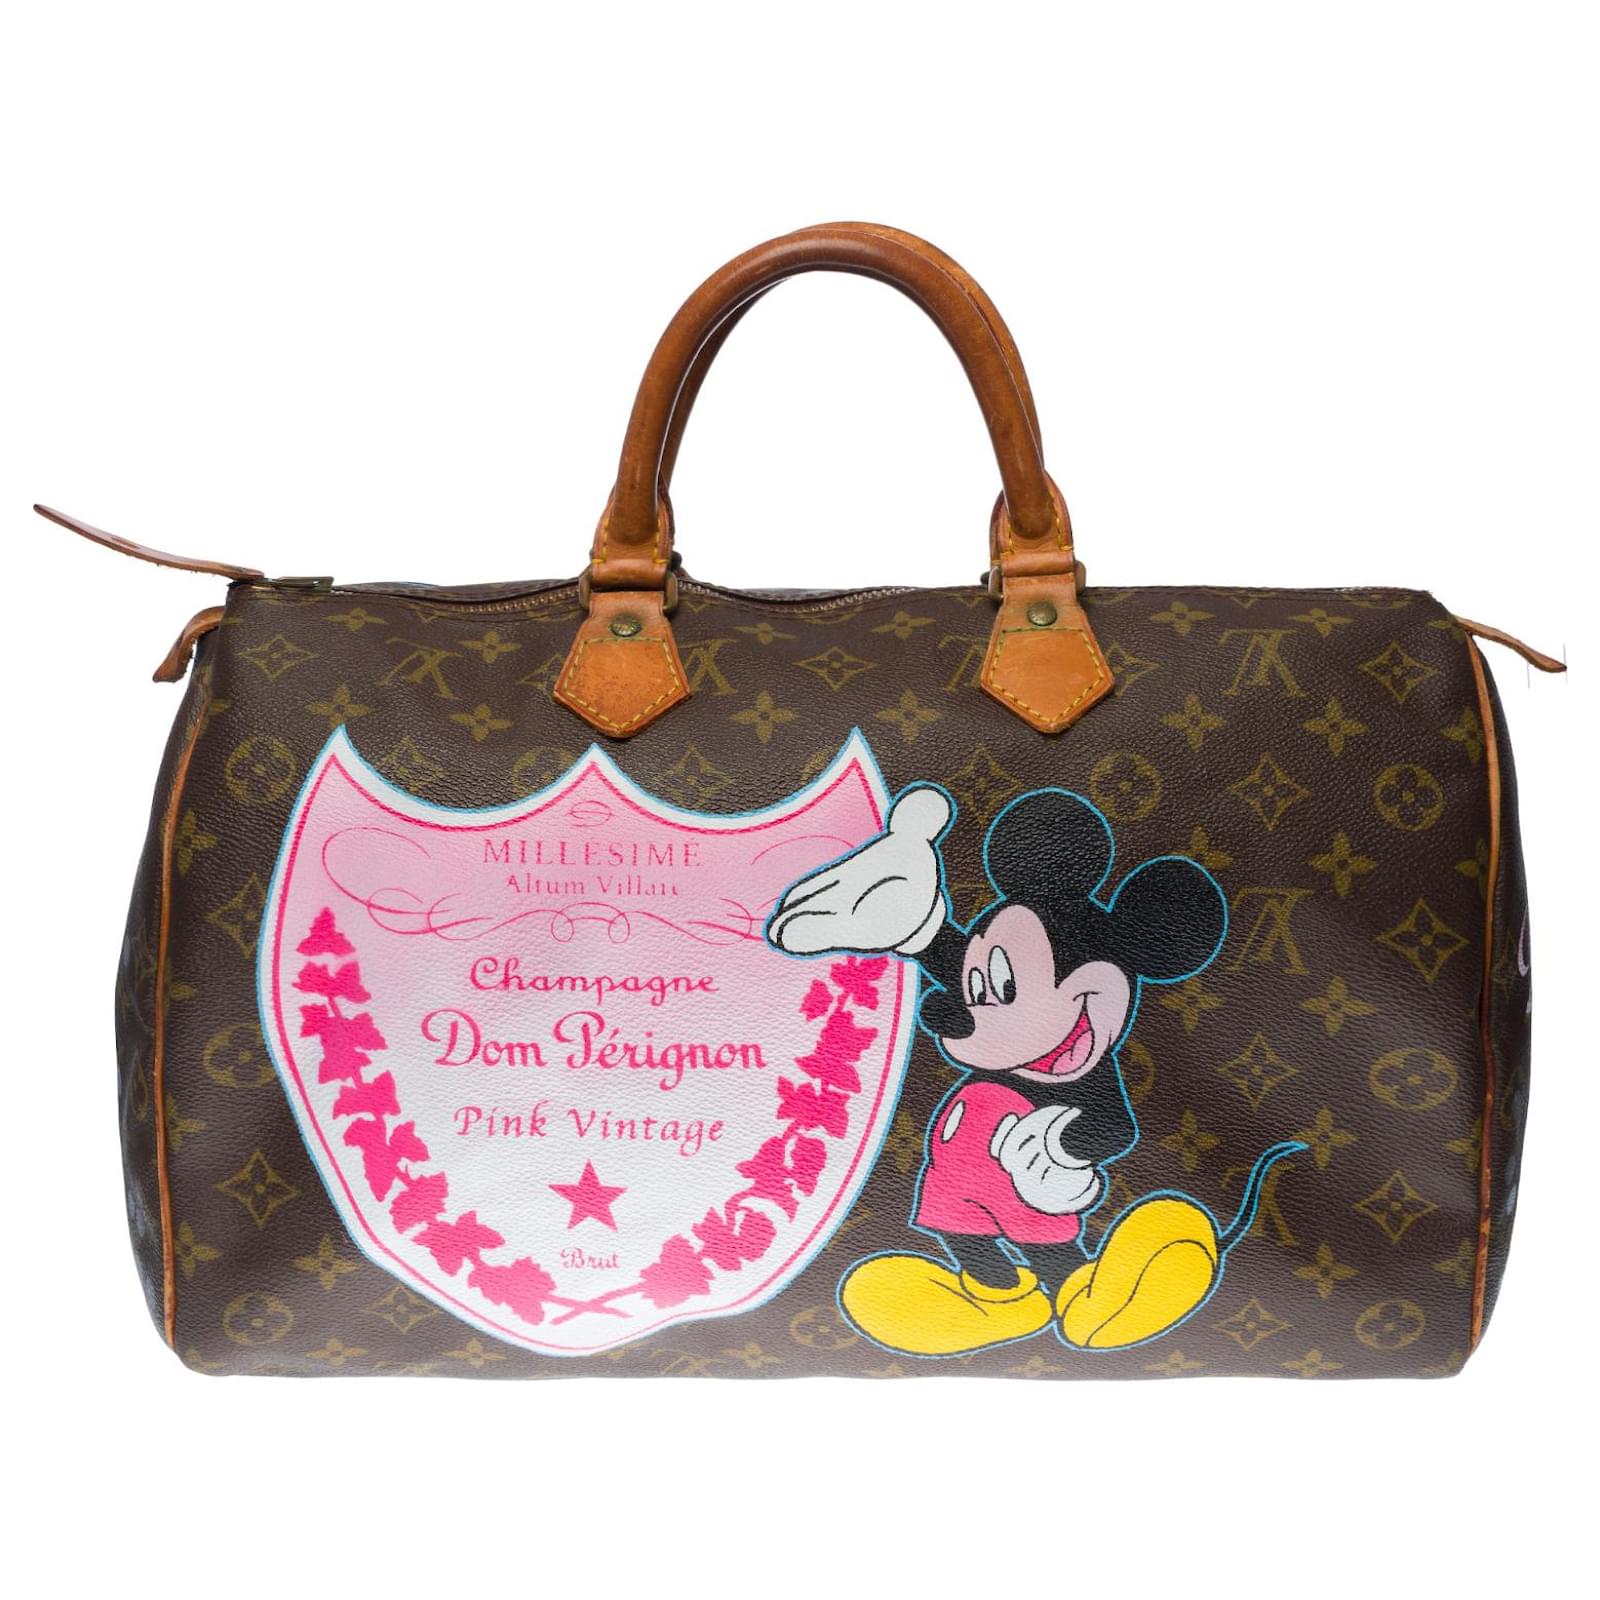 Travel bag Louis Vuitton 45 Monogram customized Mickey Vs Taz by